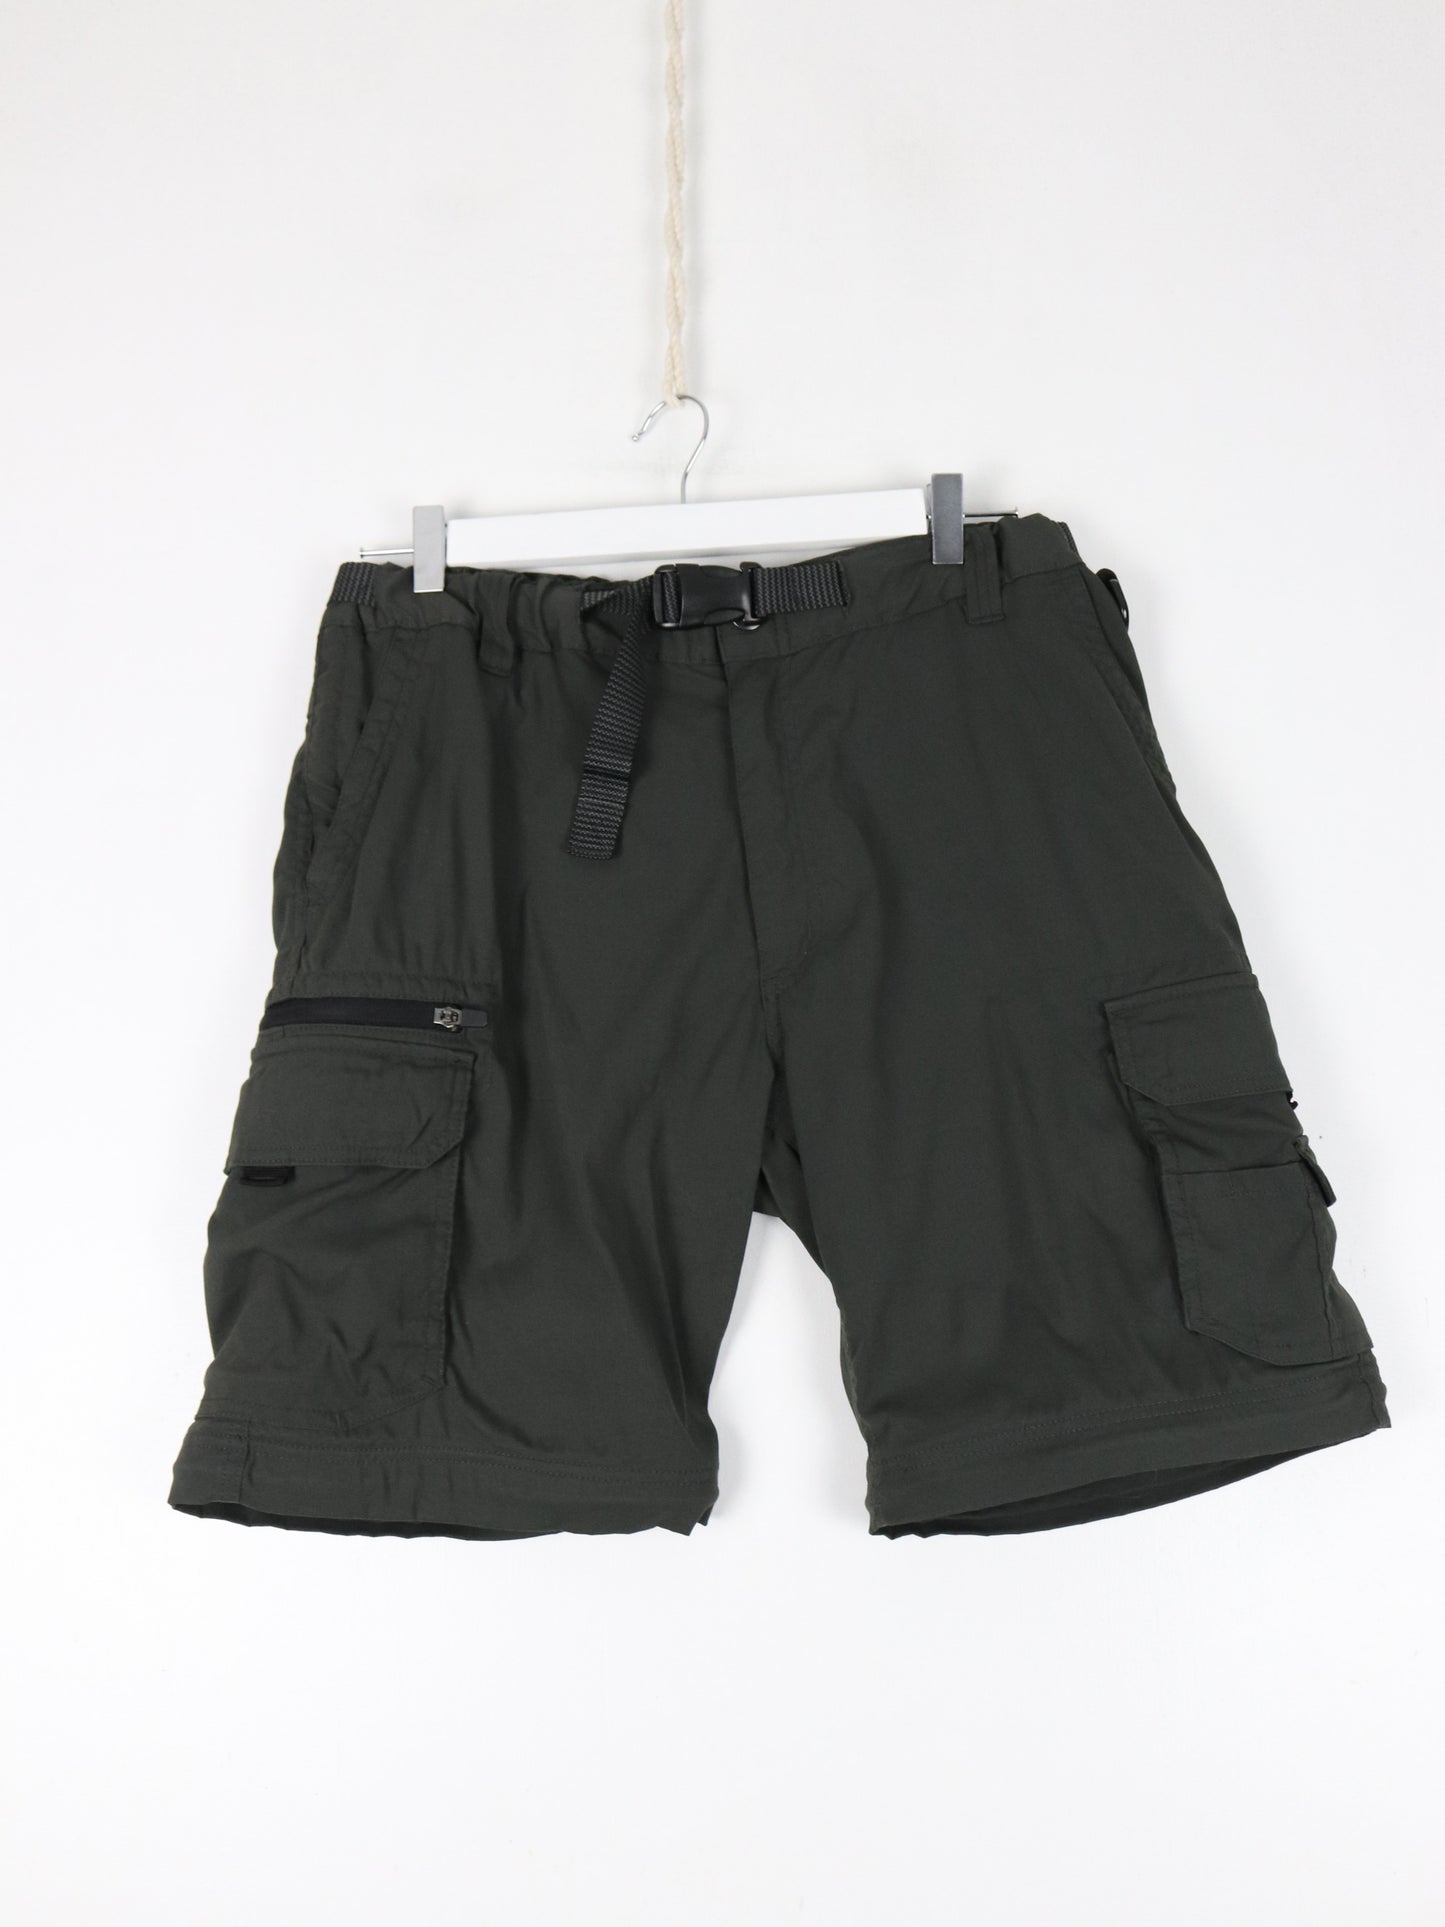 BC Clothing Shorts Mens Medium Grey Cargo Hiking